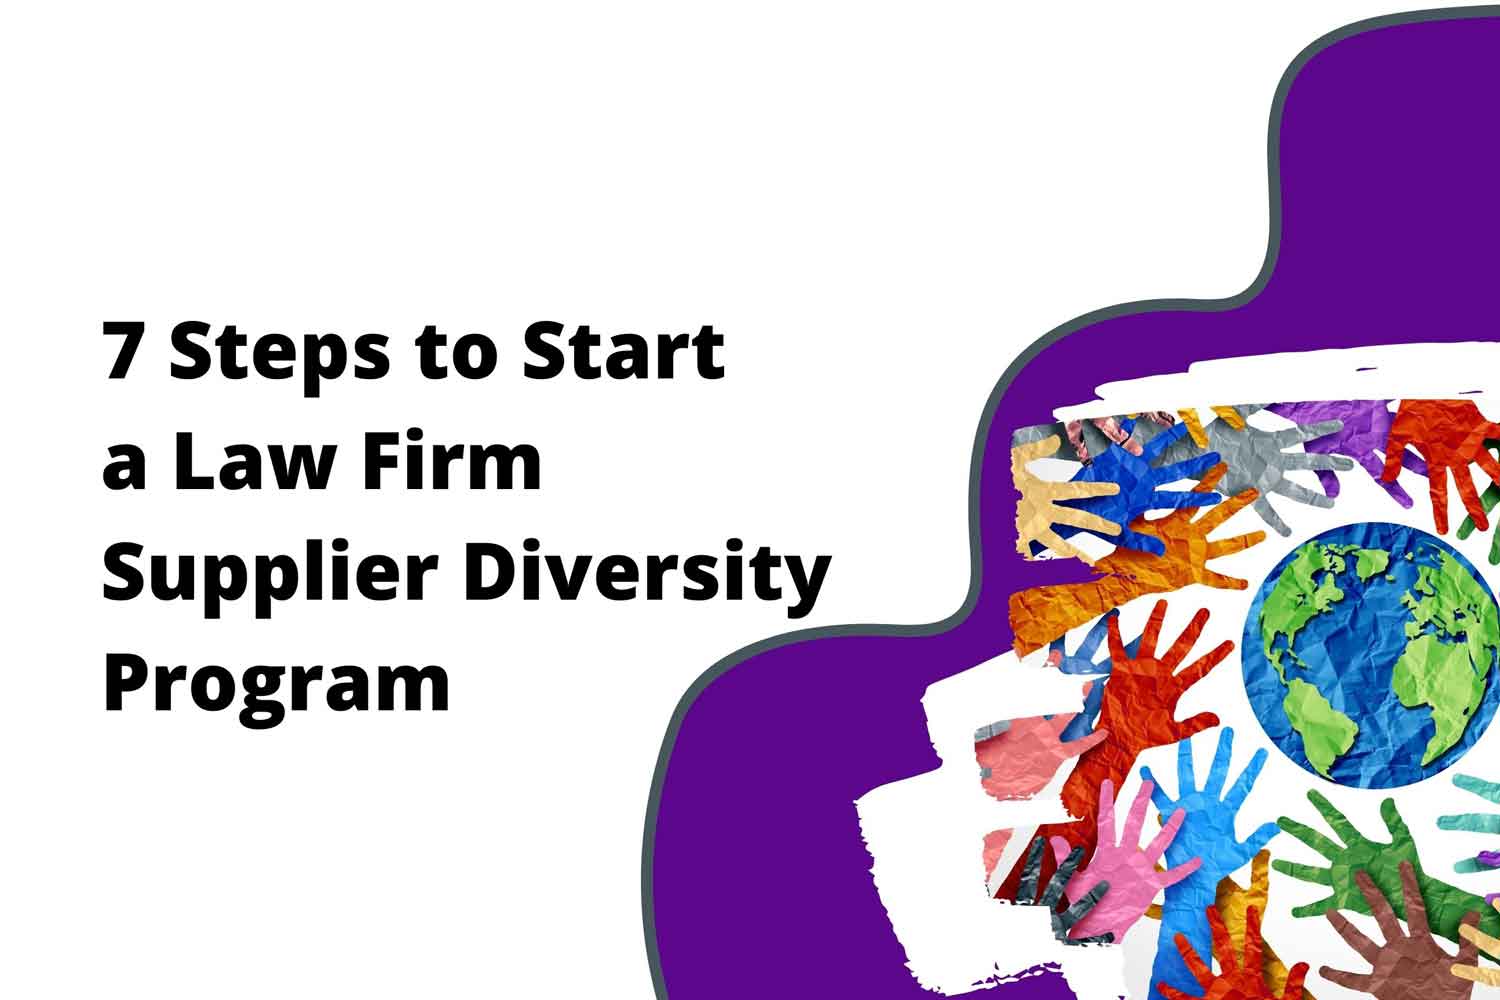 7 Steps to Start a Law Firm Supplier Diversity Program